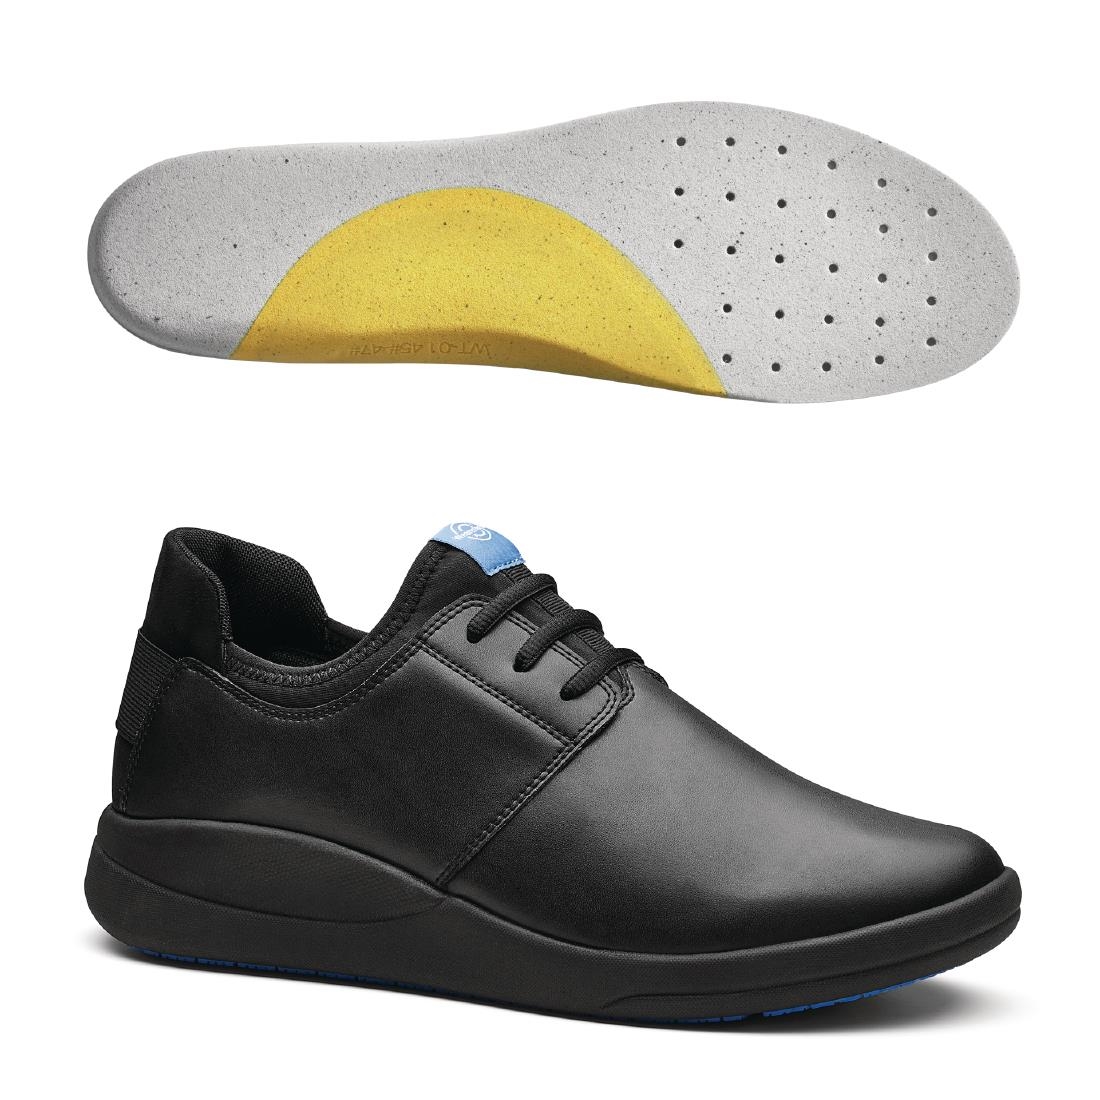 WearerTech Relieve Shoe Black with Soft Insoles Size 36